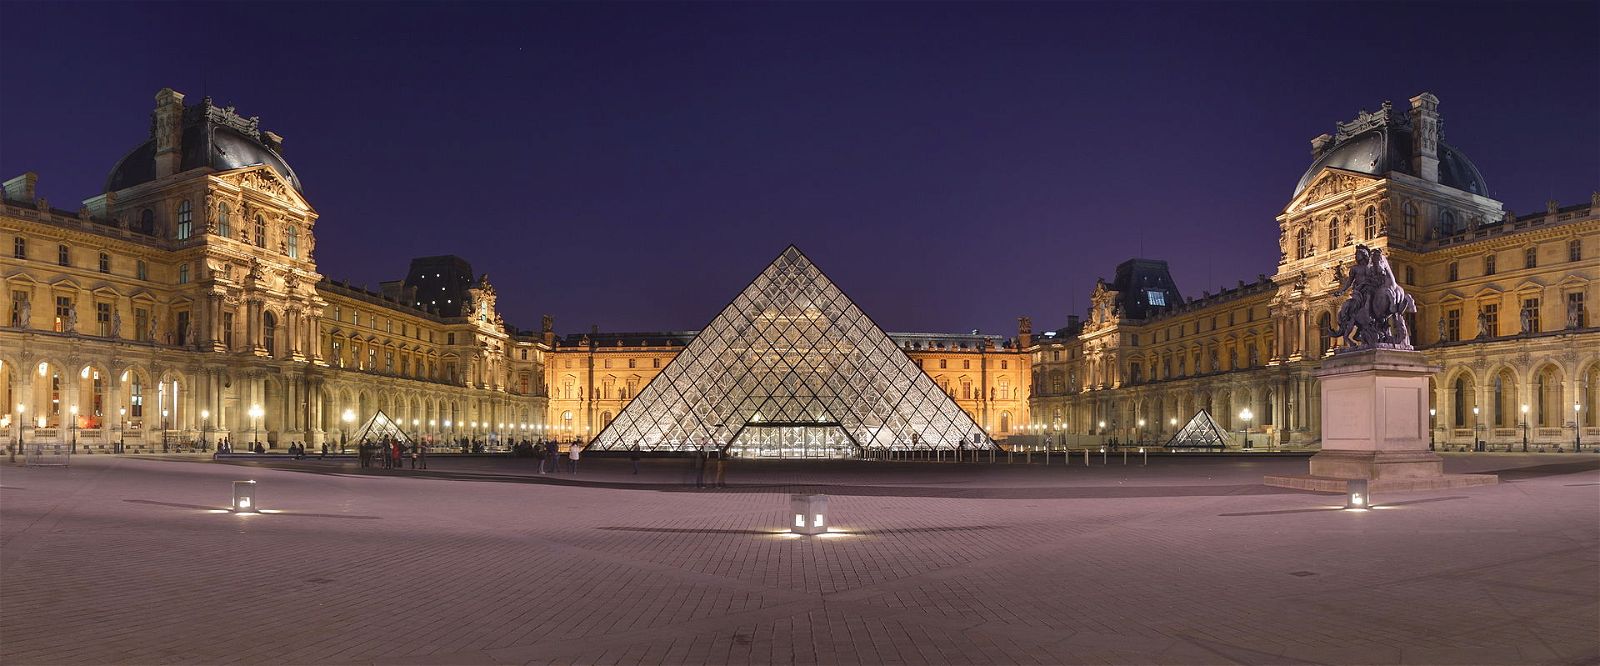 Museo del Louvre di Parigi